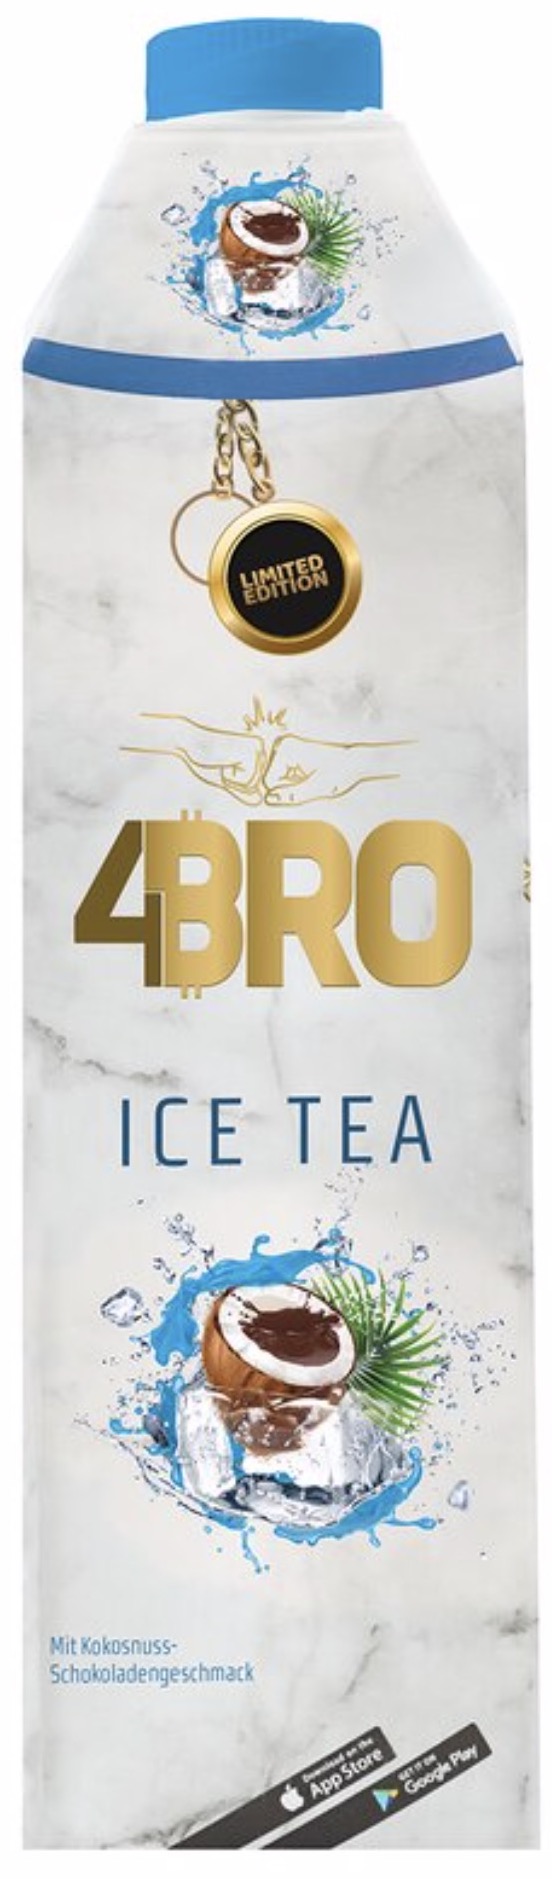 4Bro - Ice Tea Coco Choco 1,0L